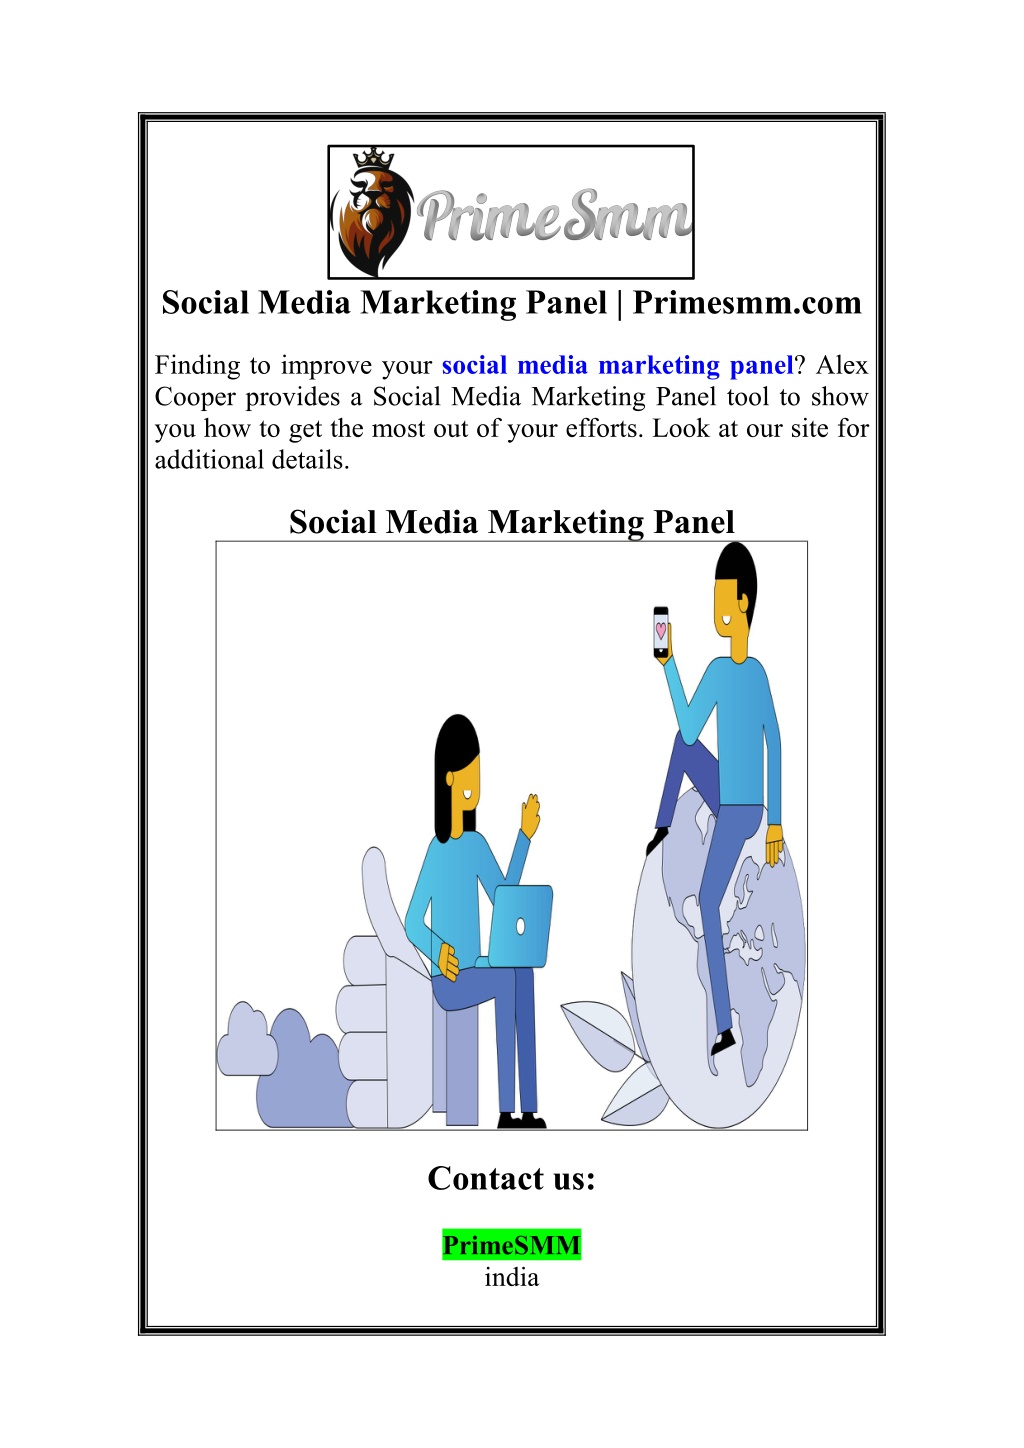 social media marketing panel primesmm com l.w